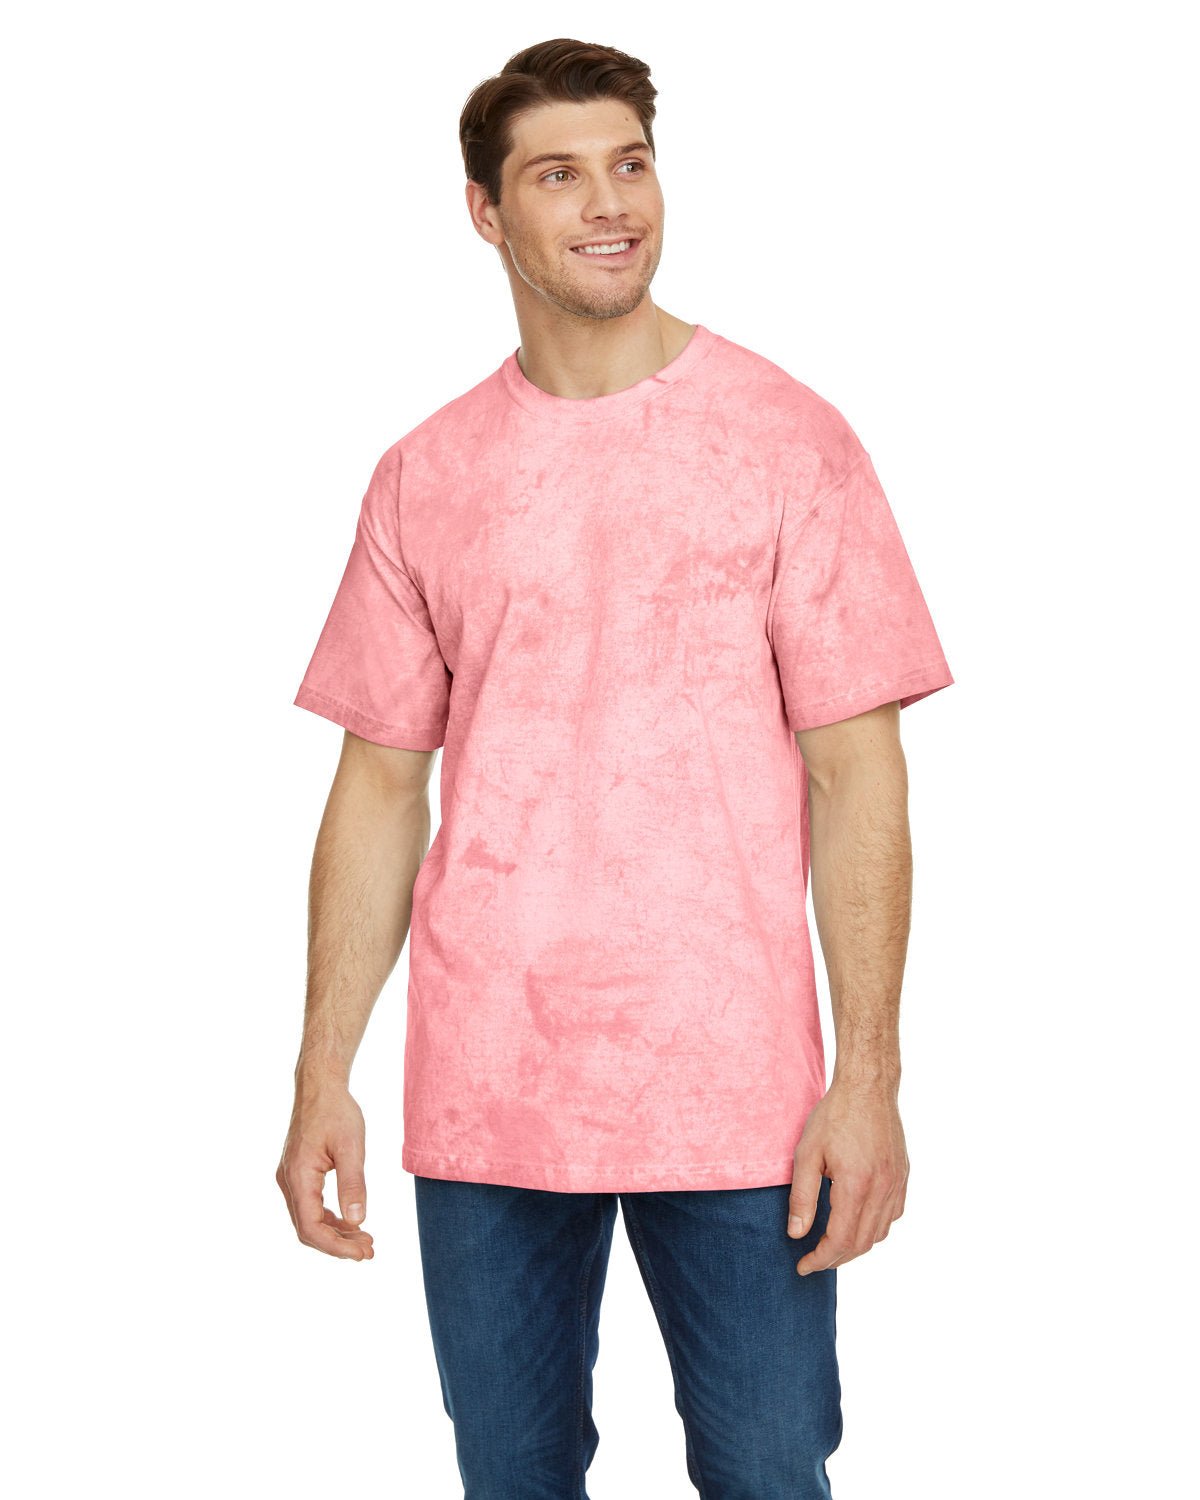 1745-Comfort Colors-CLAY-Comfort Colors-T-Shirts-1